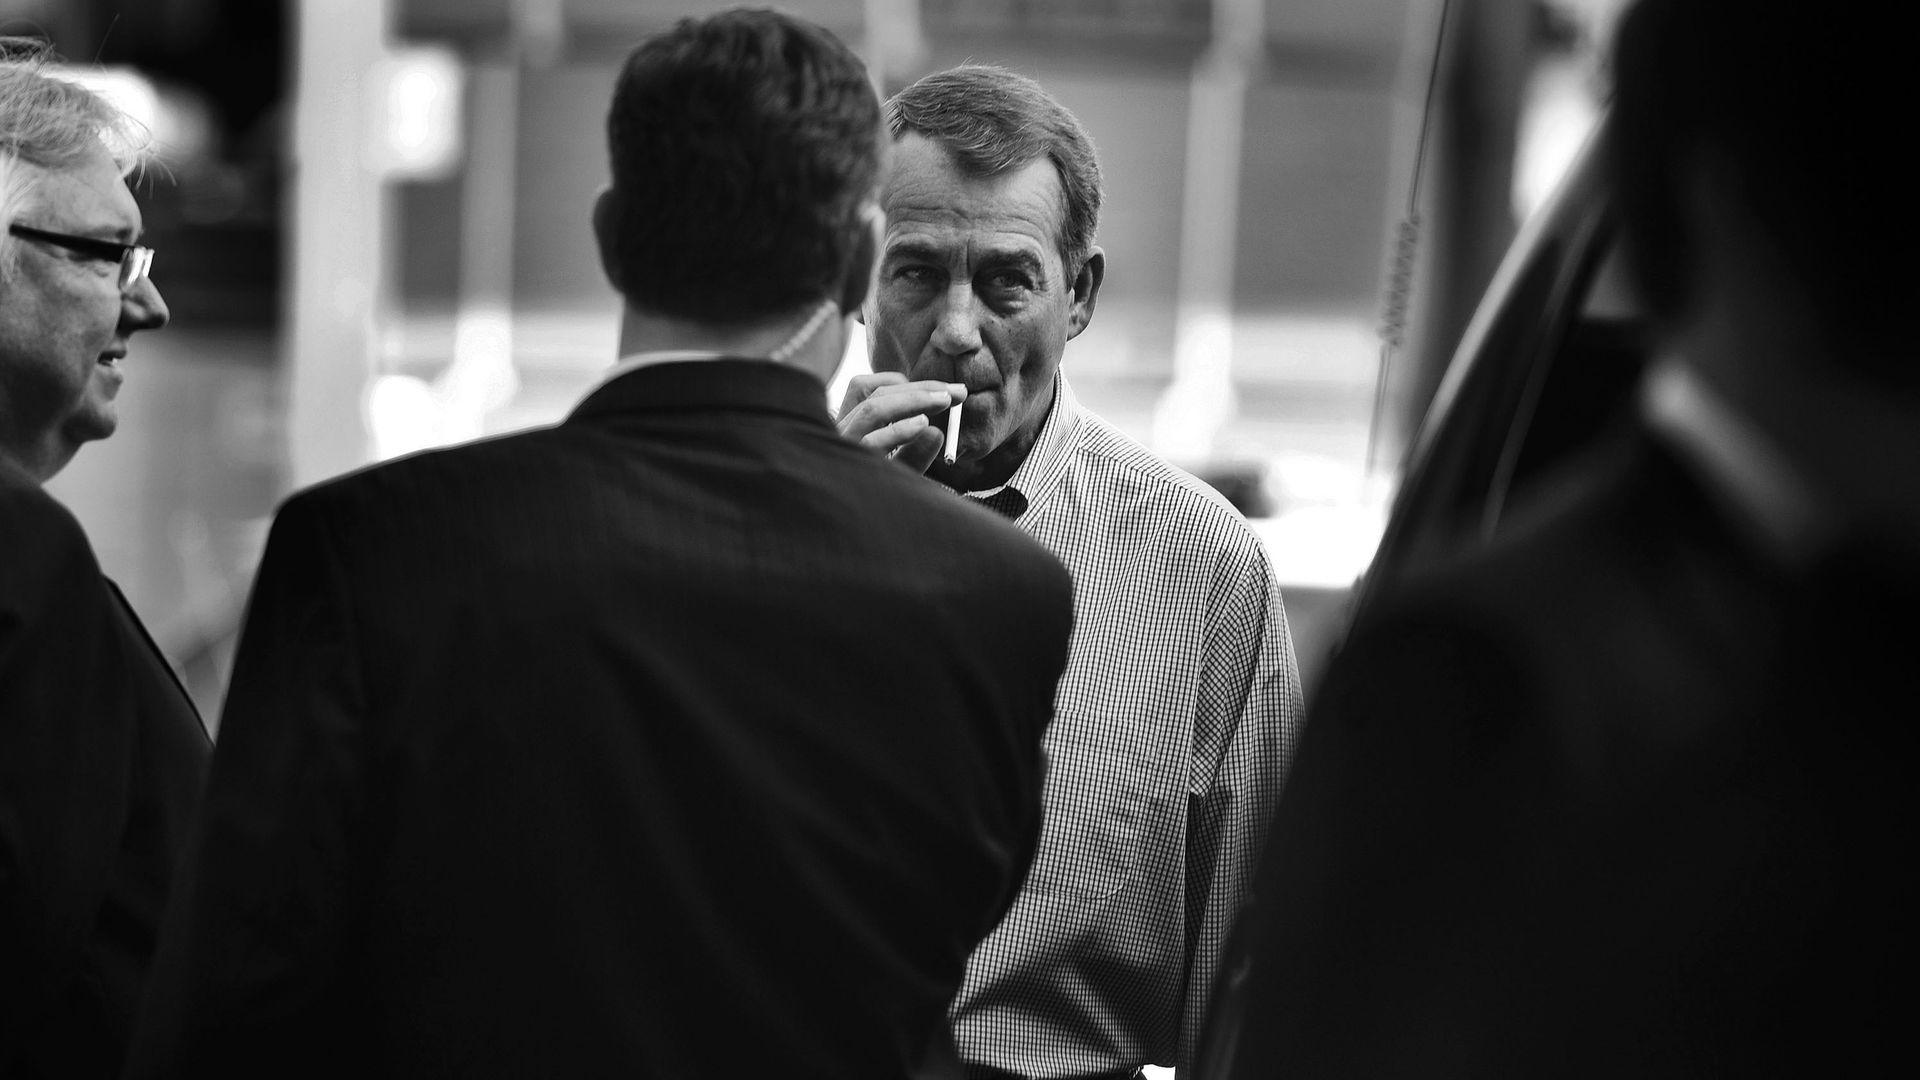 Then-House Minority Leader John Boehner is seen smoking a cigarette in 2010.